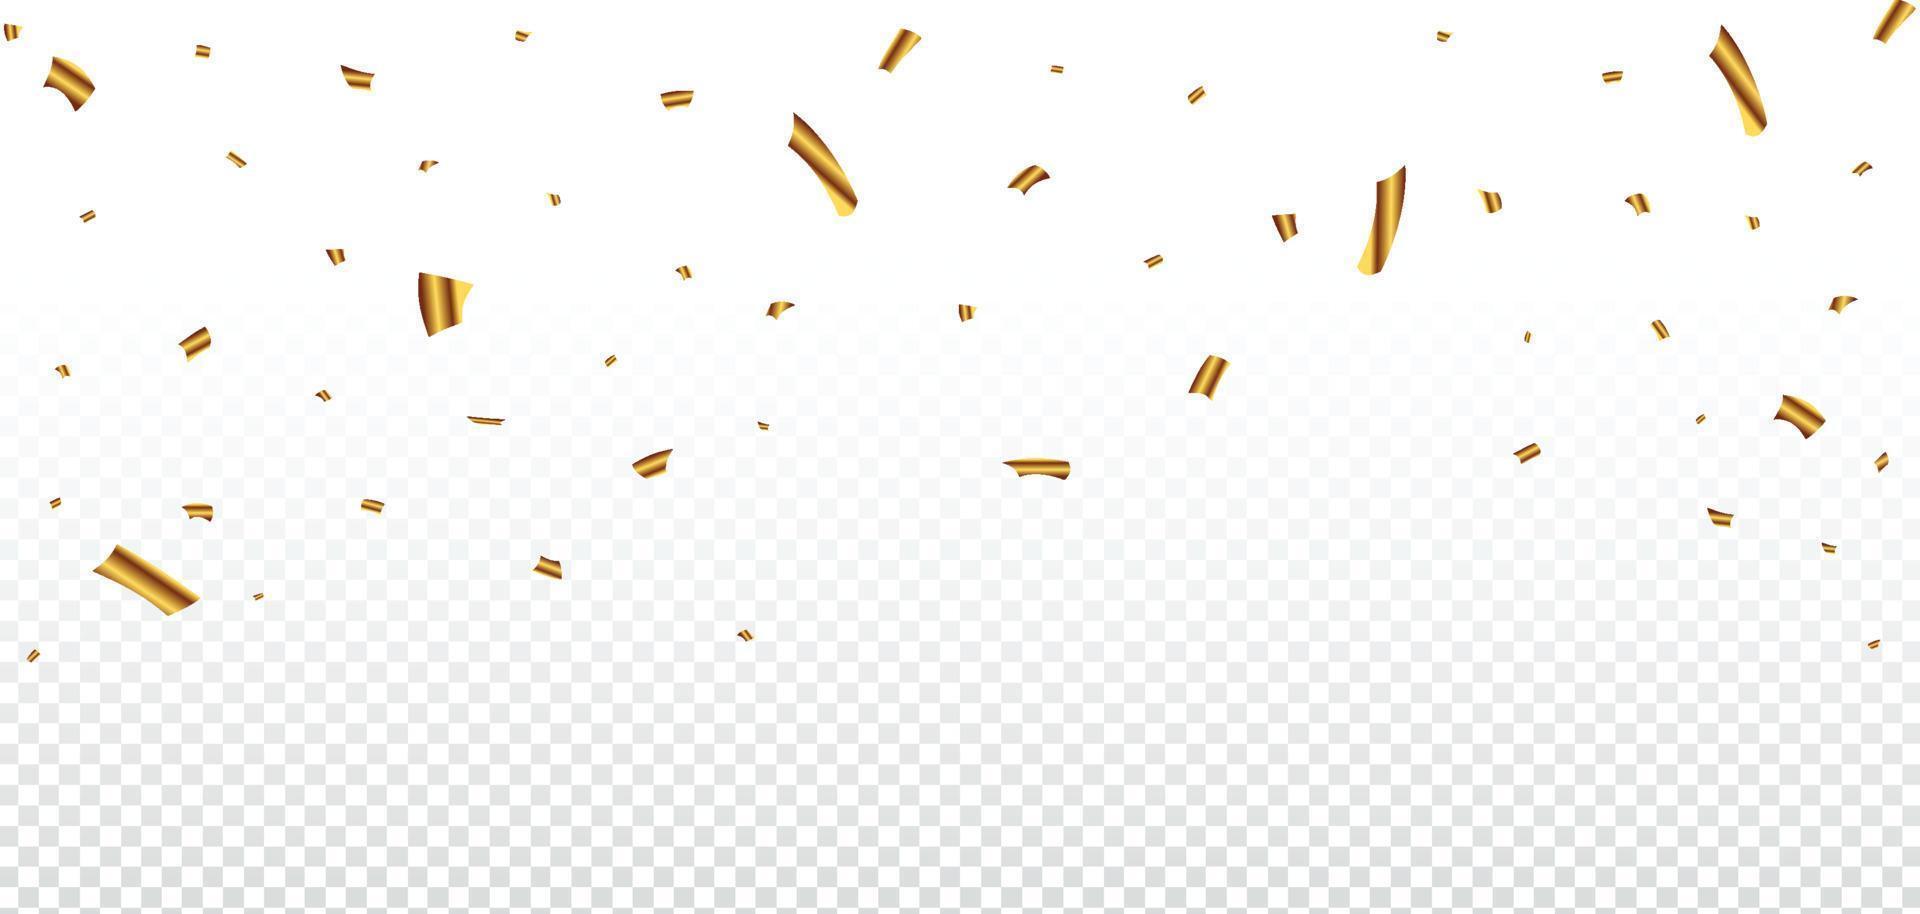 Golden confetti falling illustration on a transparent background. Festival celebration elements with confetti and gold foil. Golden confetti falling for carnival or party background. vector